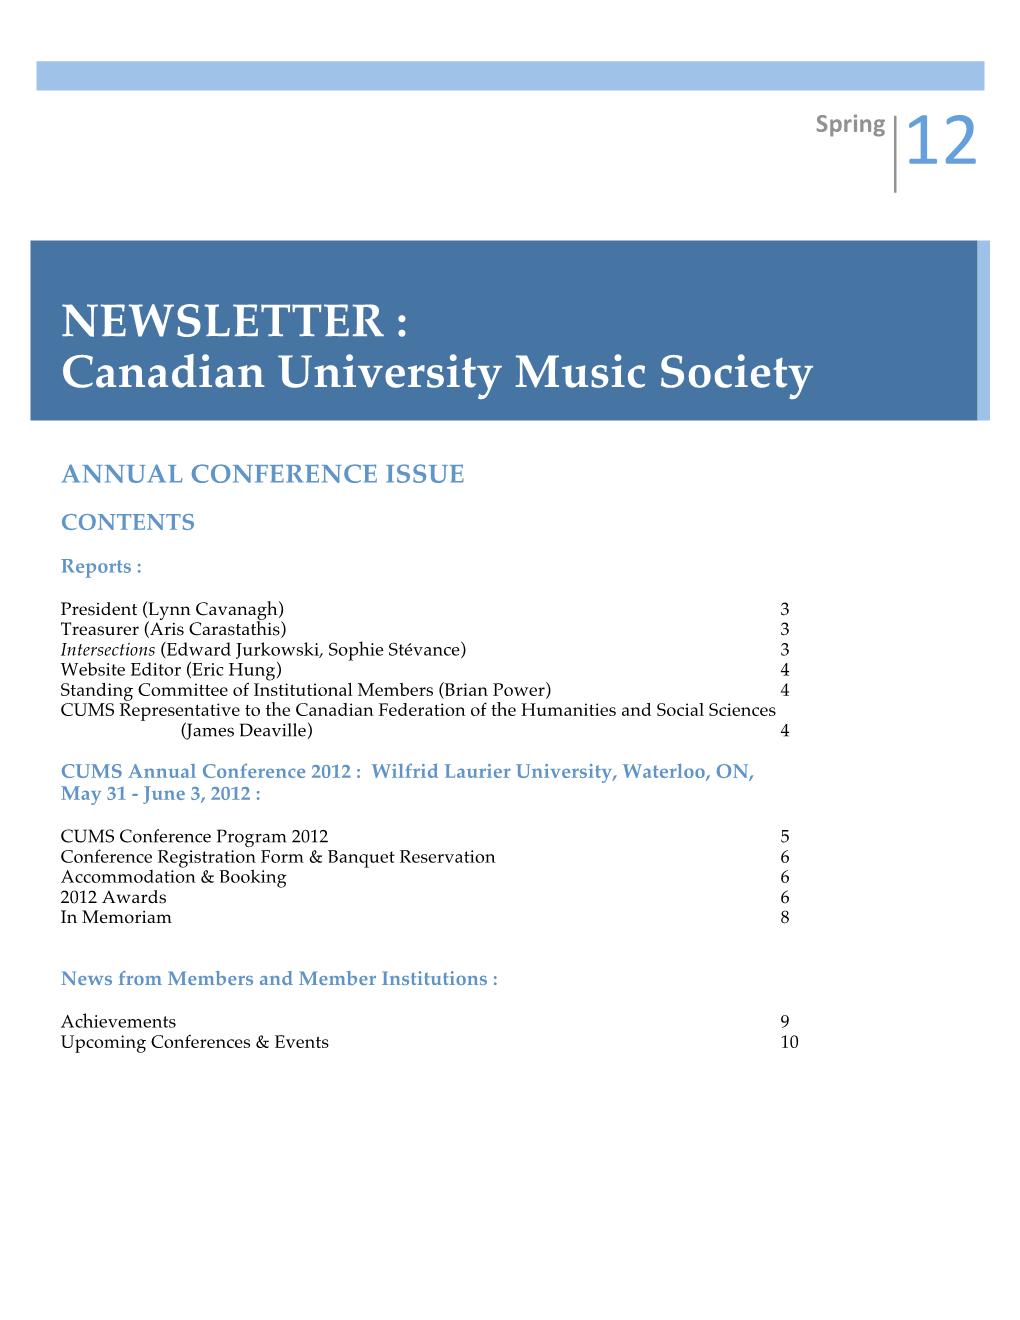 Canadian University Music Society NEWSLETTER